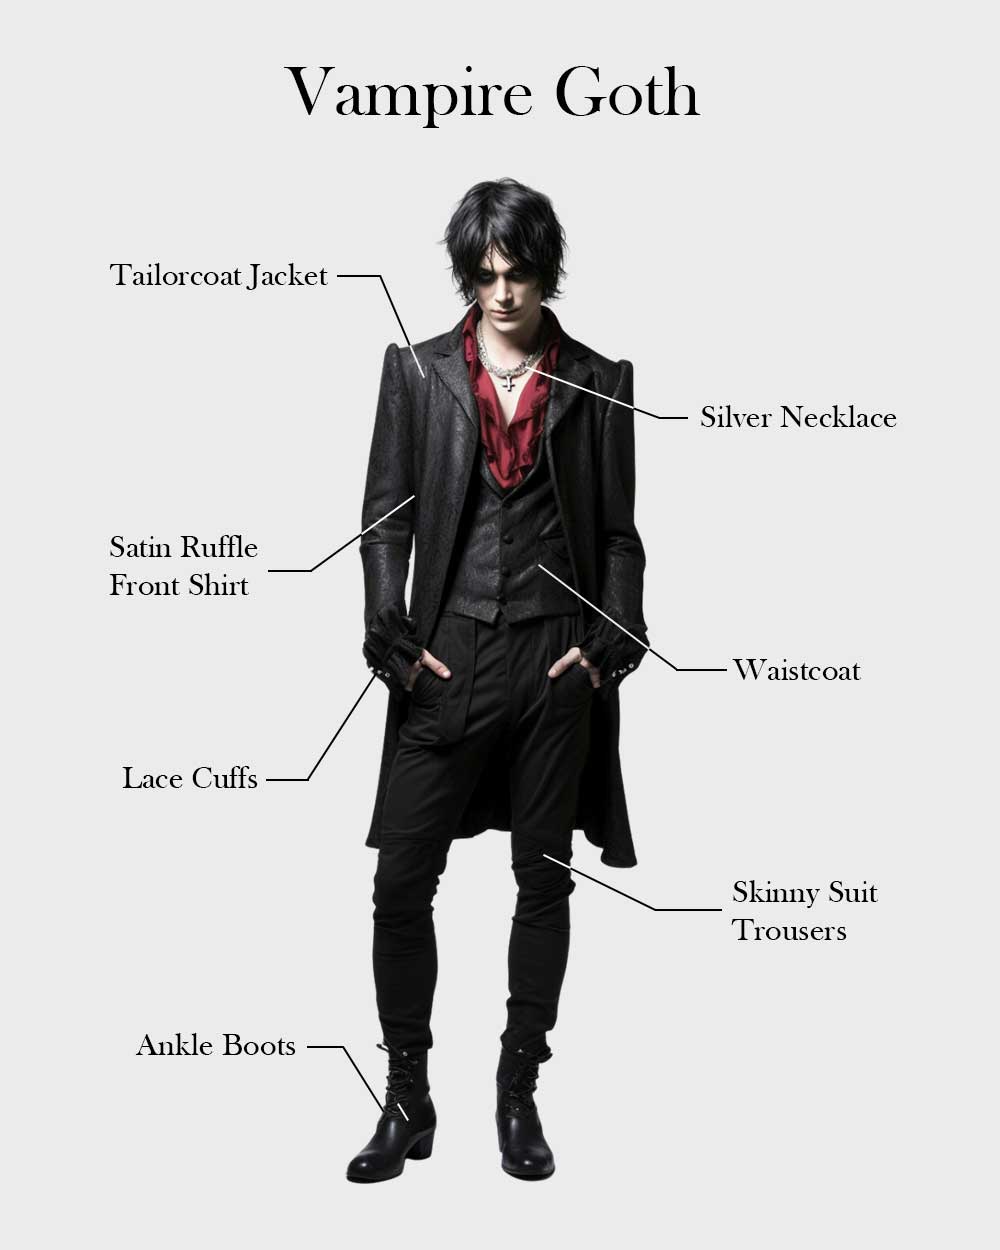 Male Vampire Goth fashion style